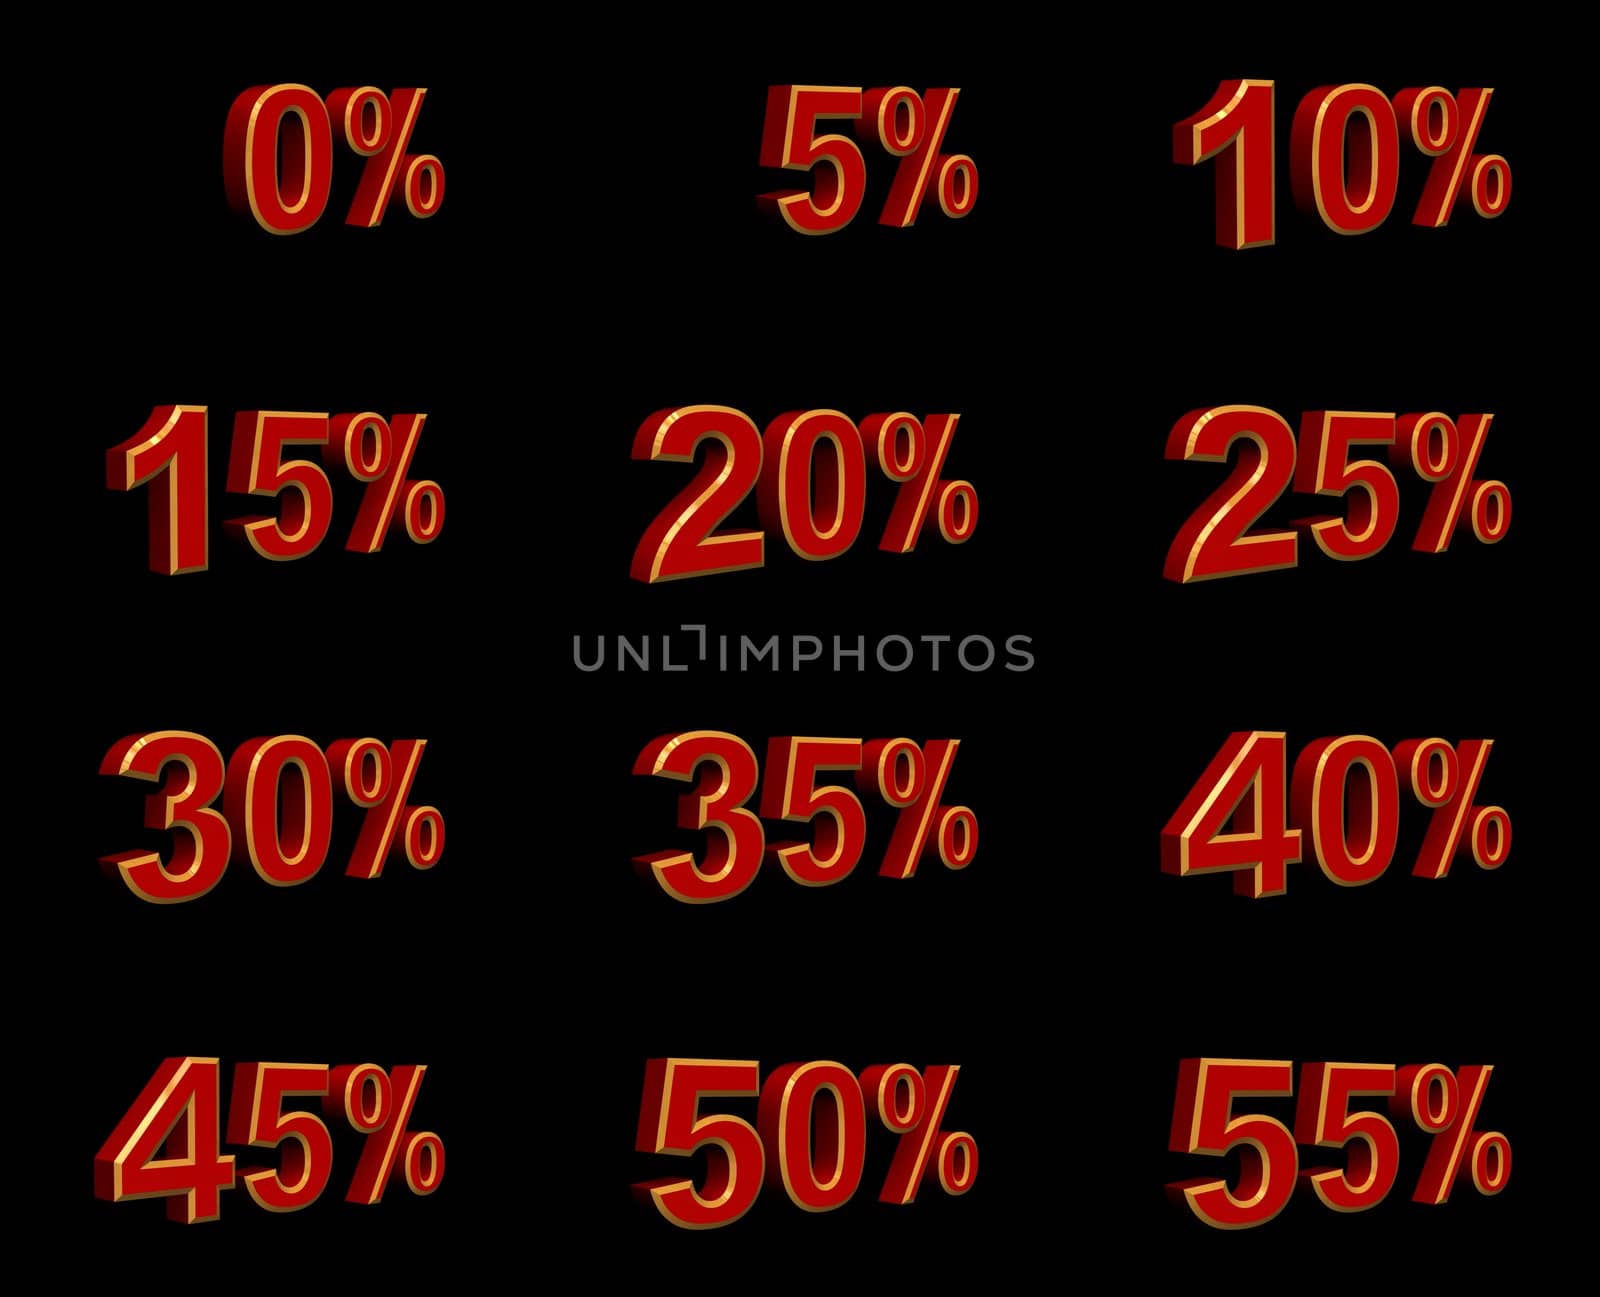 3d rendered percentage signs